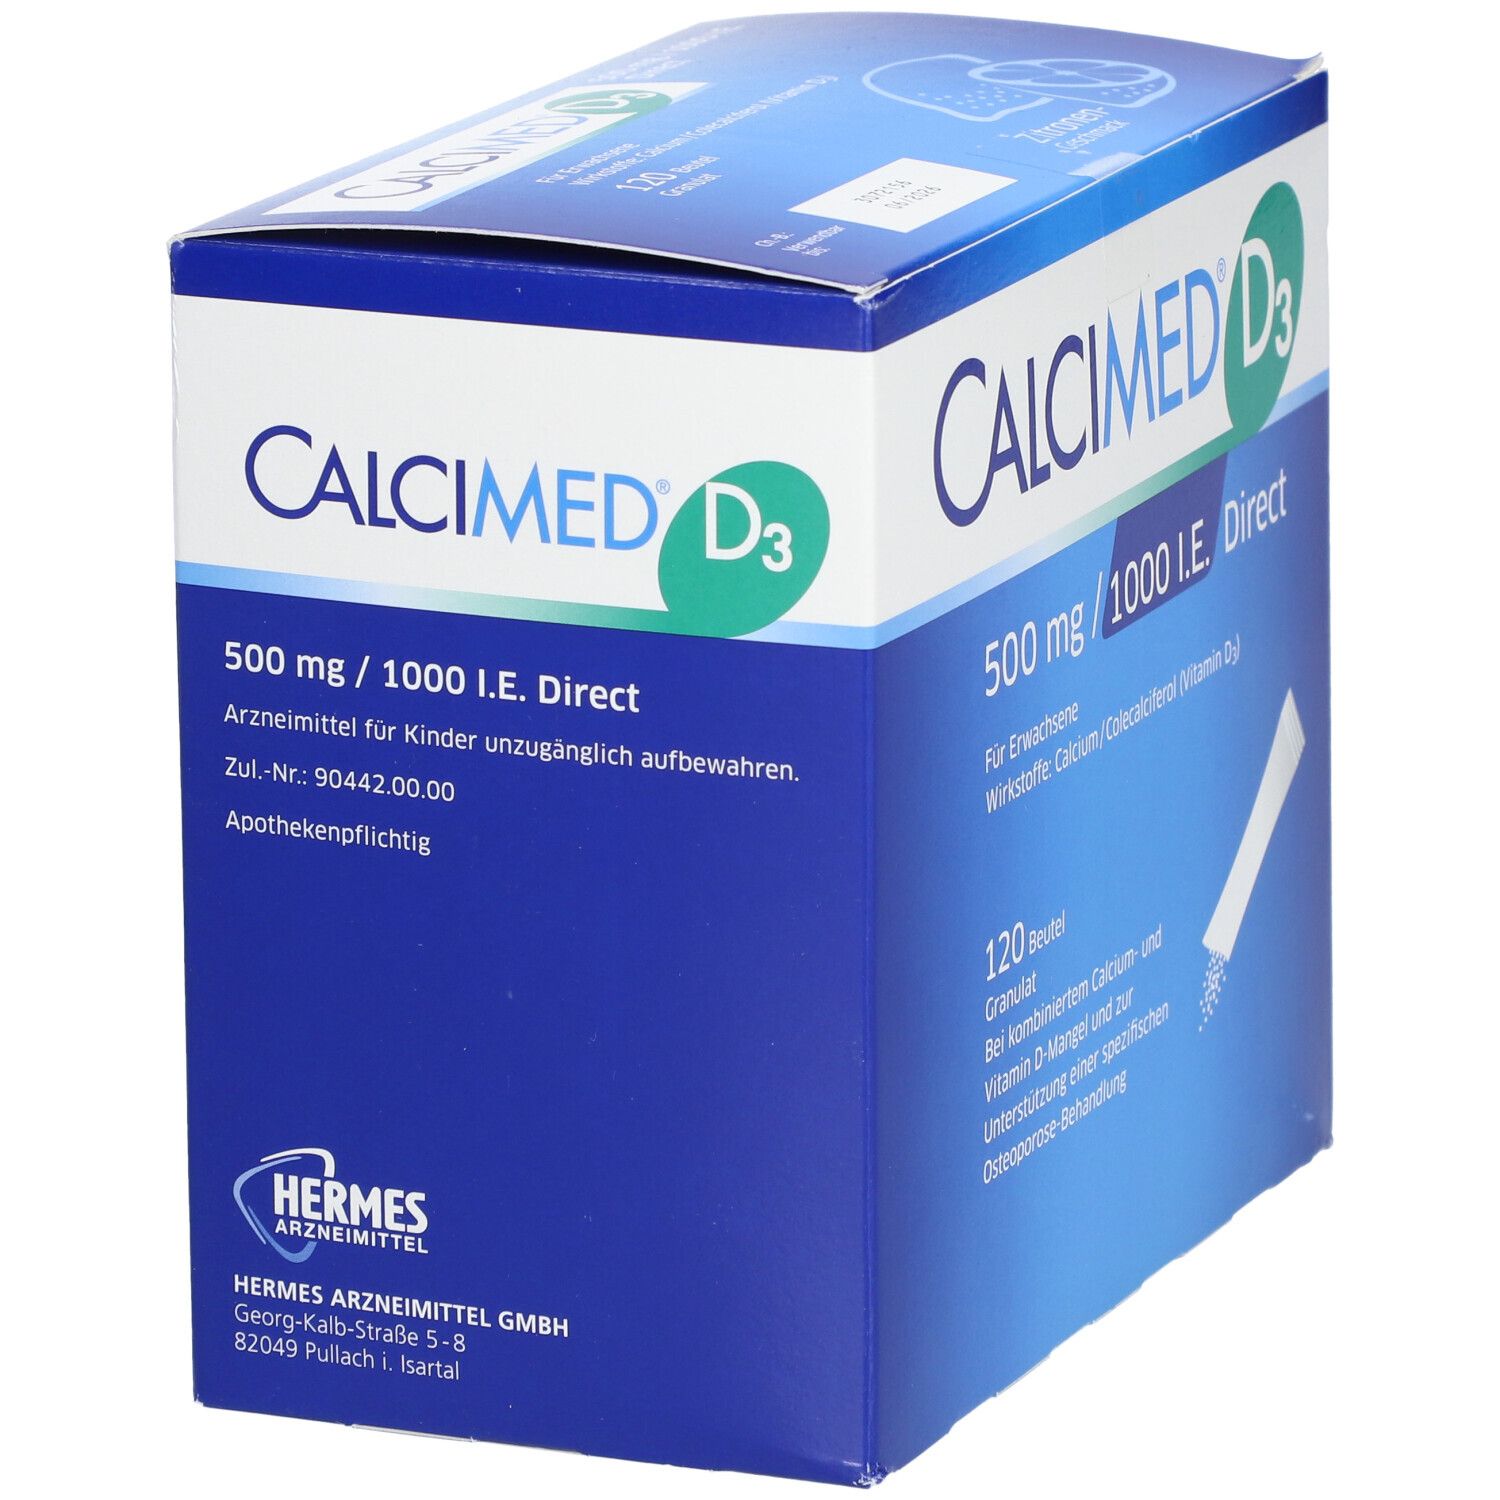 CALCIMED® D3 500mg / 1000 I.E. Direct